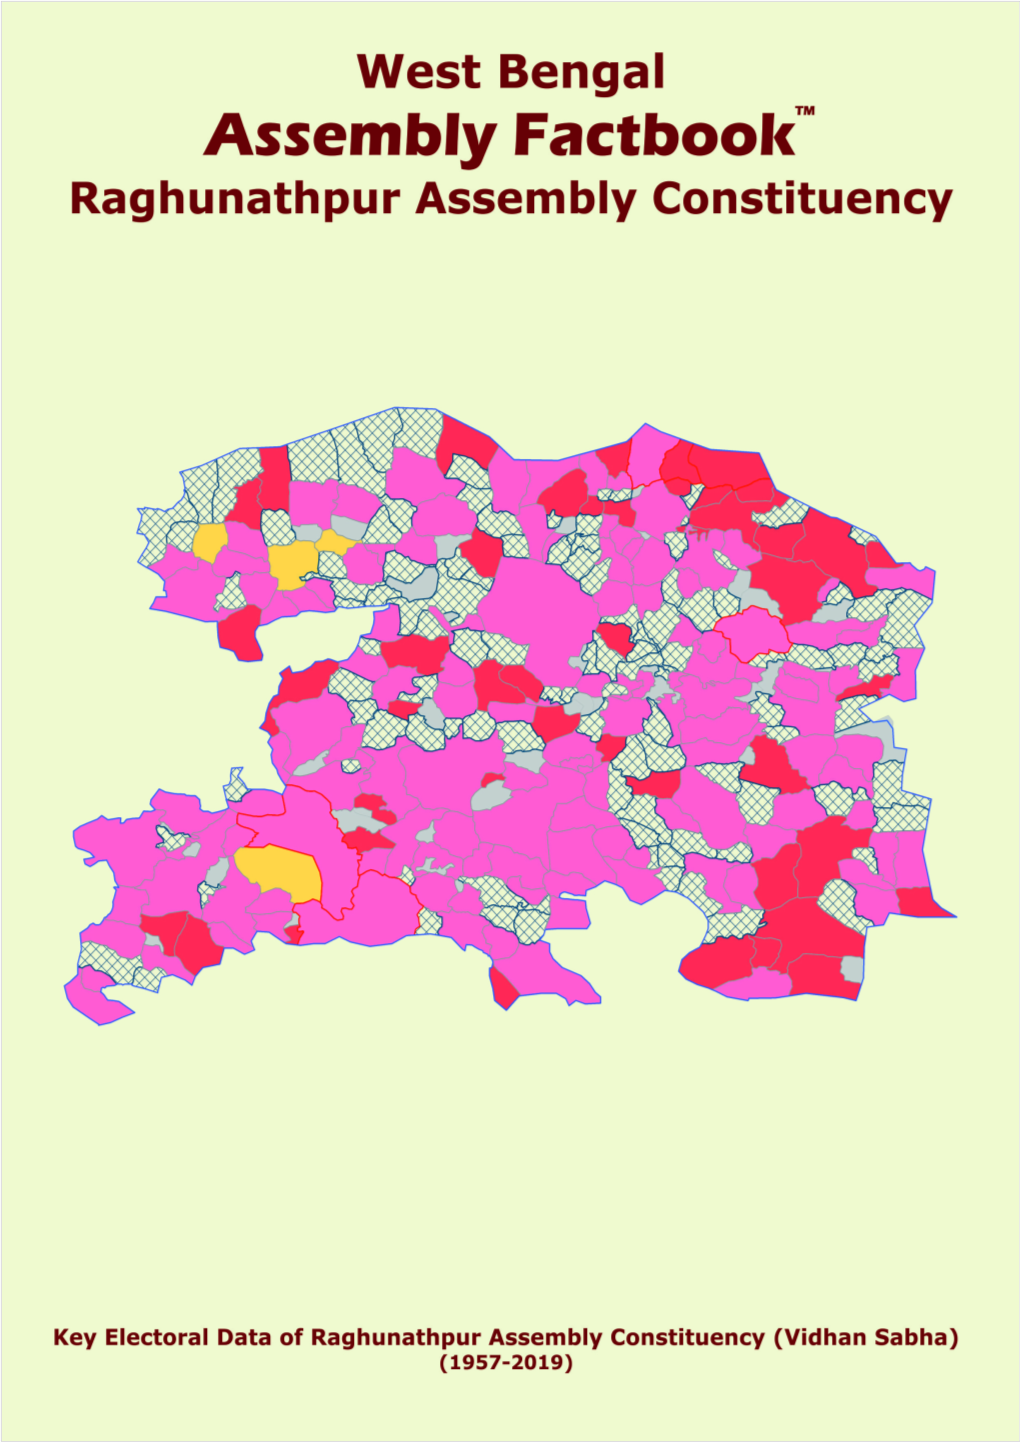 Raghunathpur Assembly West Bengal Factbook